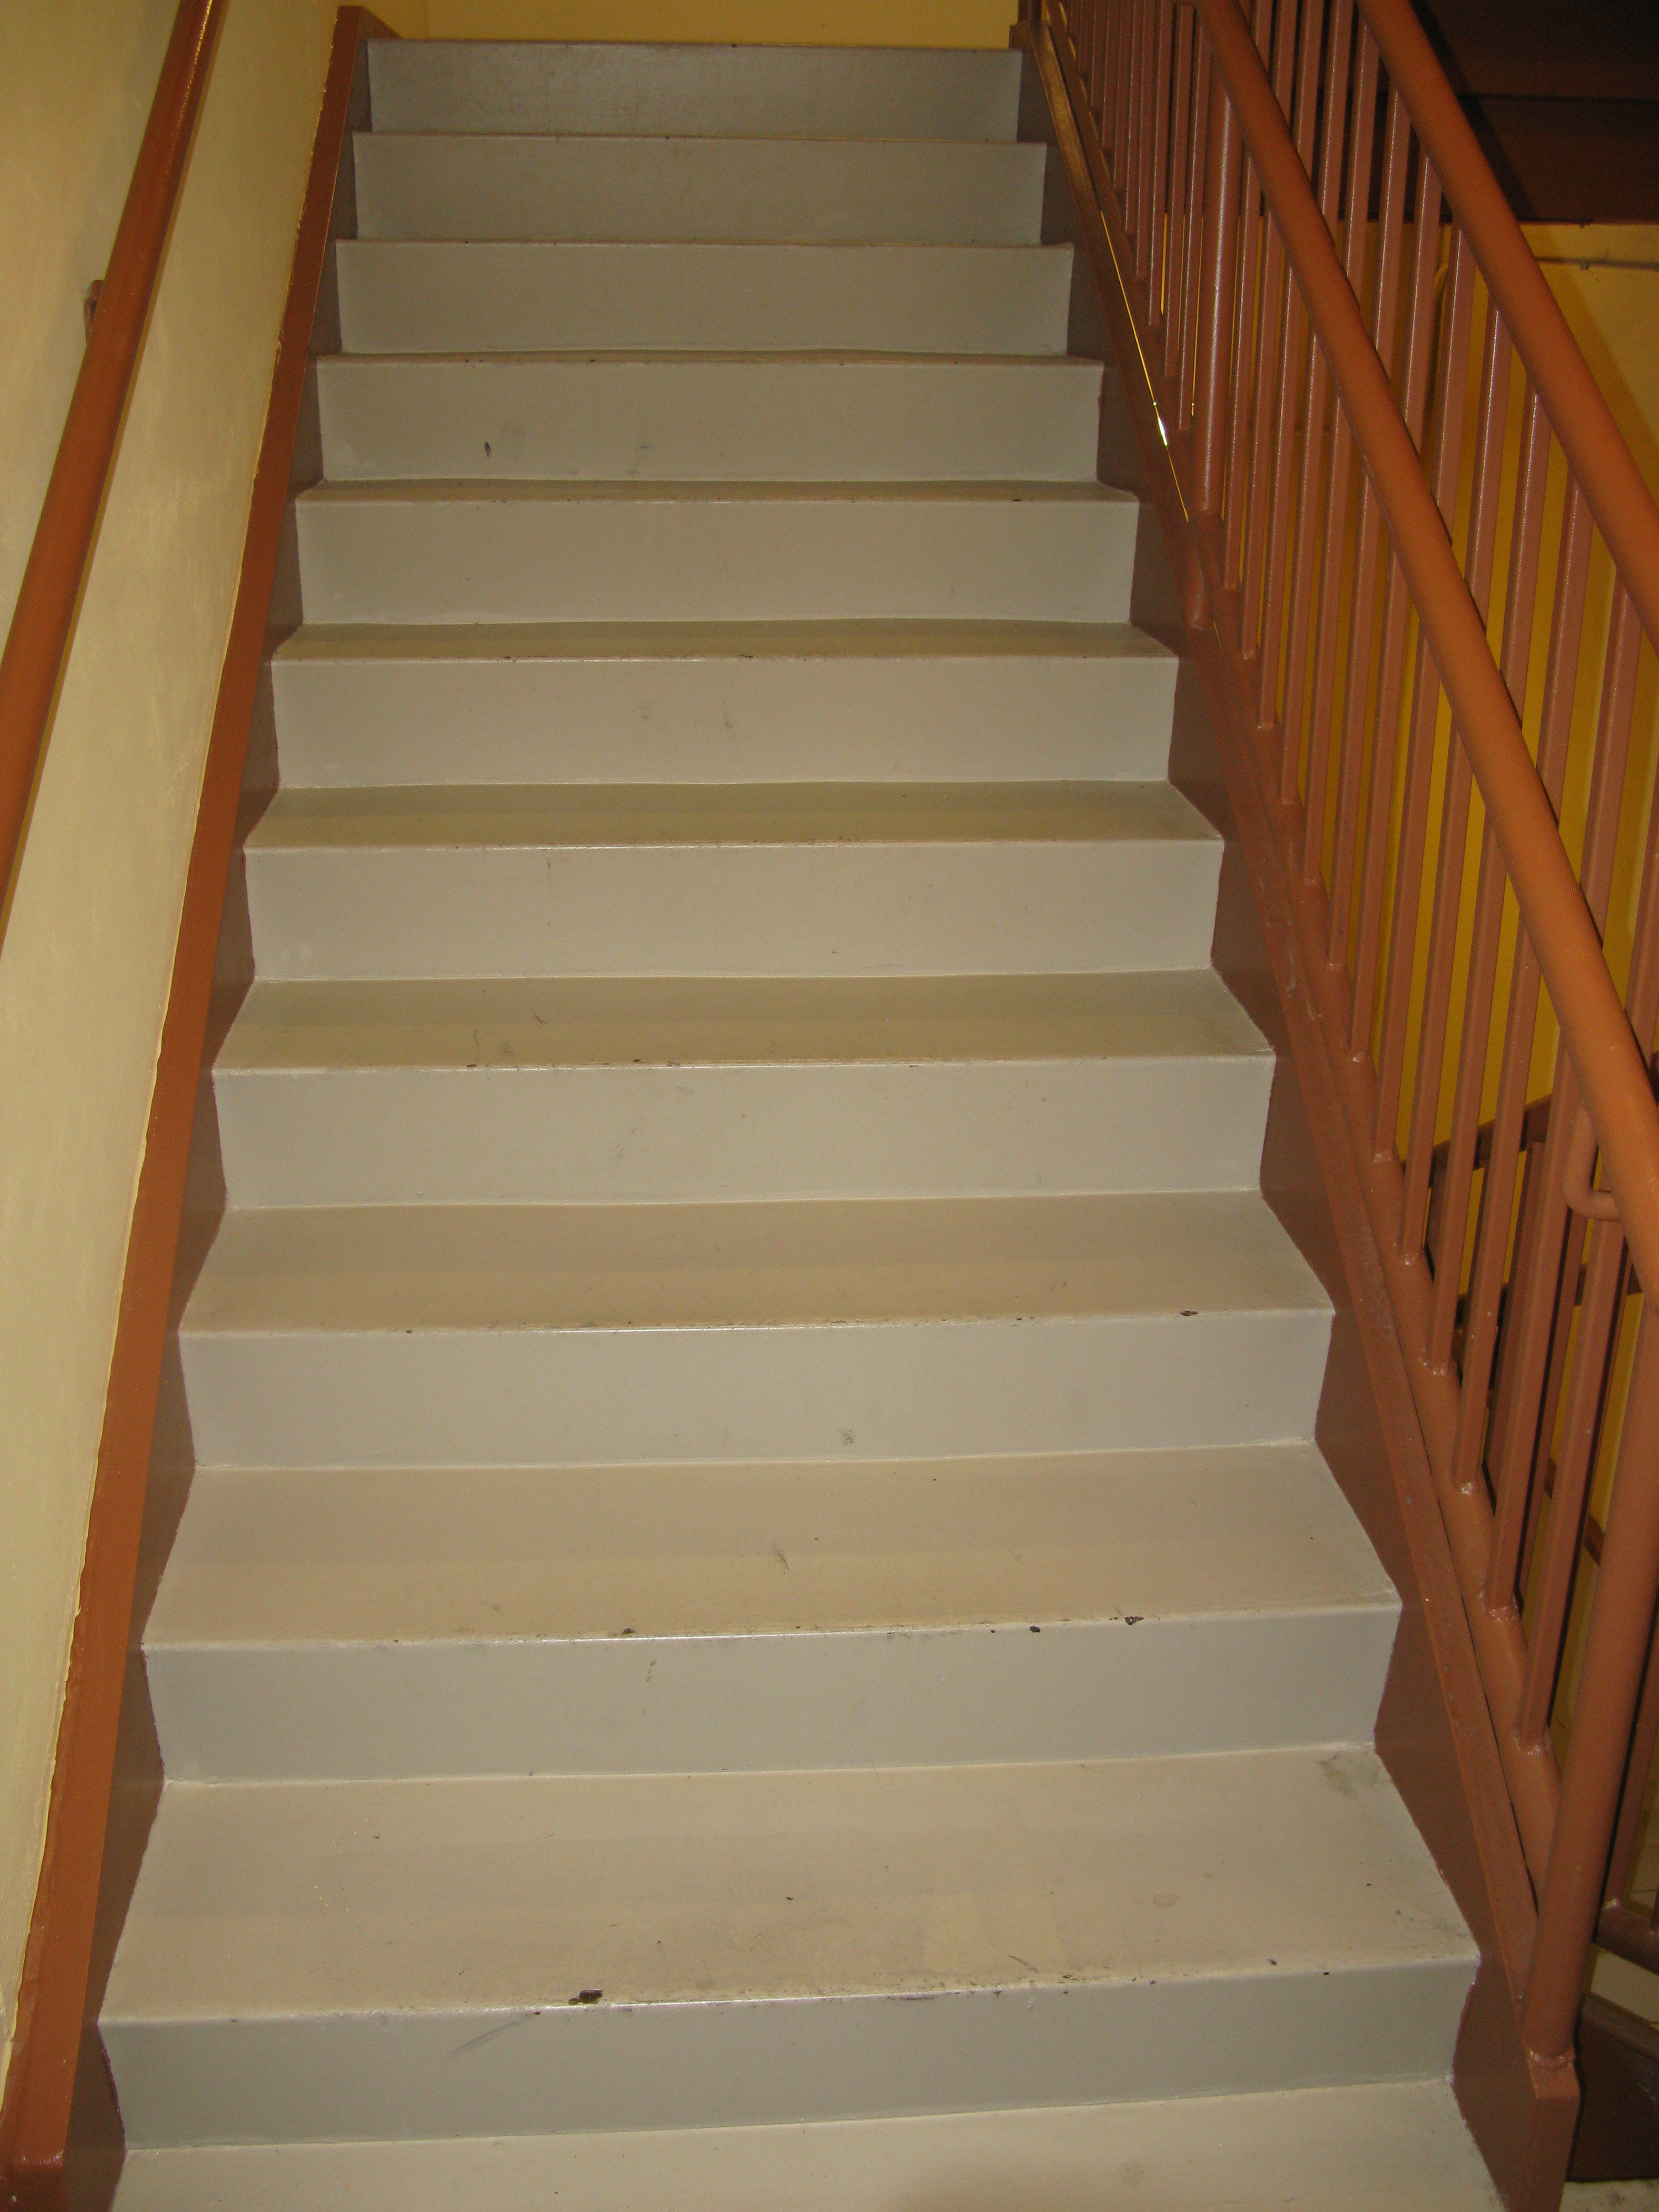 File:Long flight of stairs.jpg - Wikimedia Commons